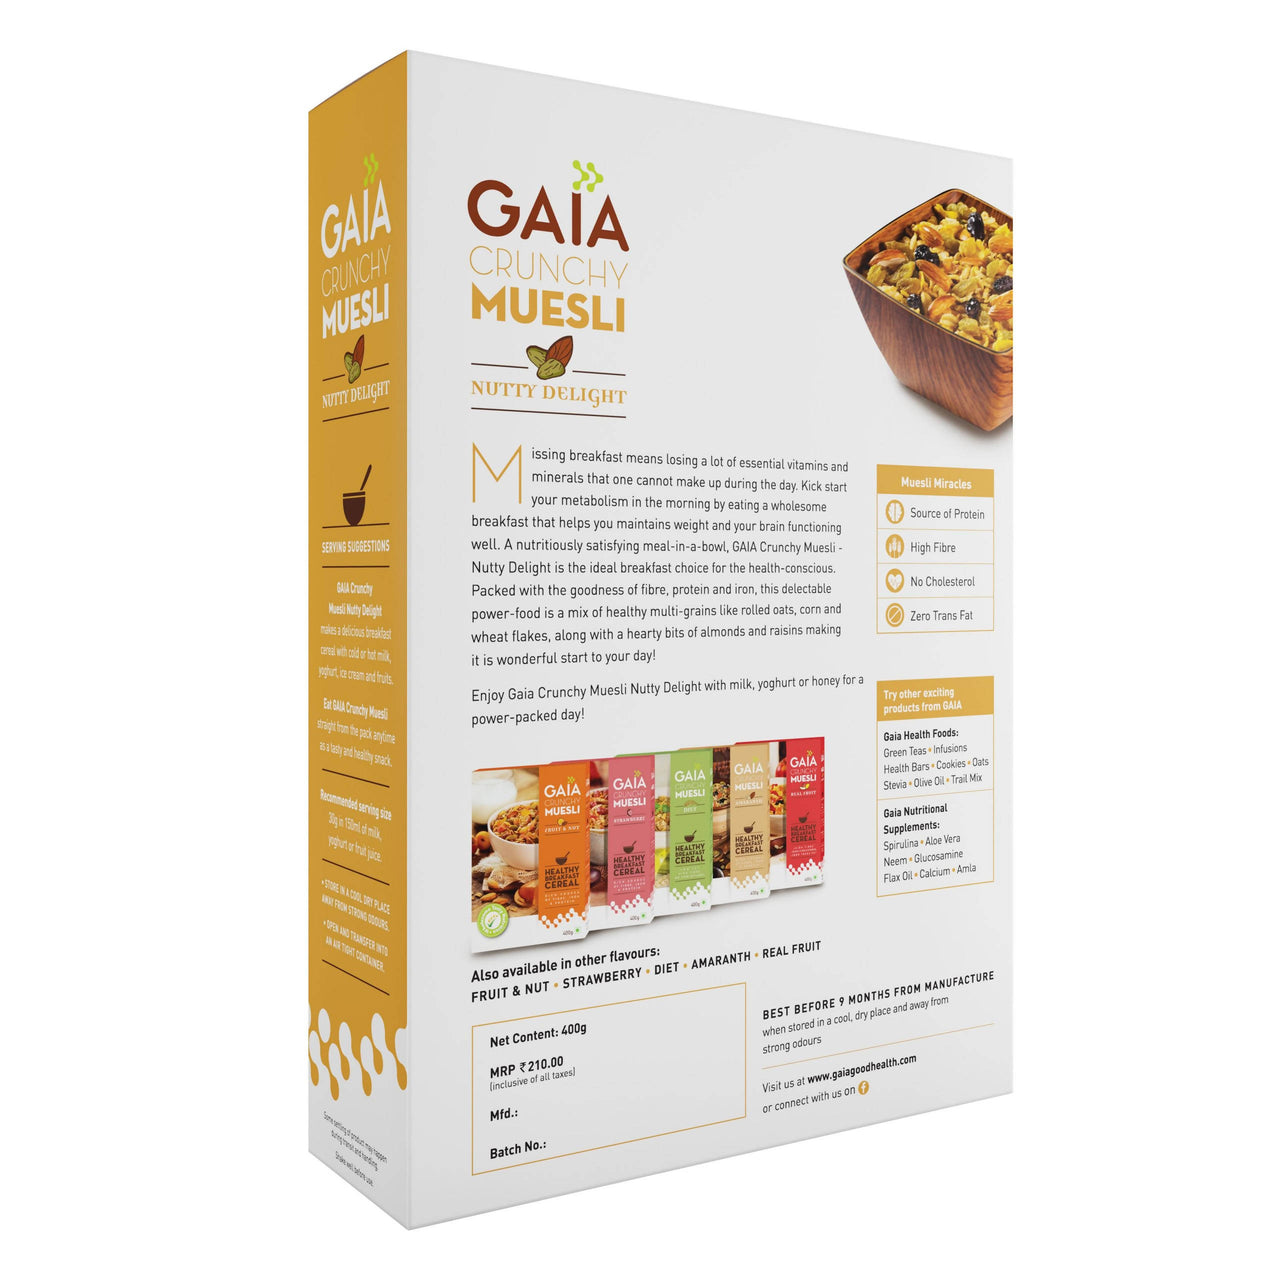 Gaia Crunchy Muesli–Nutty Delight